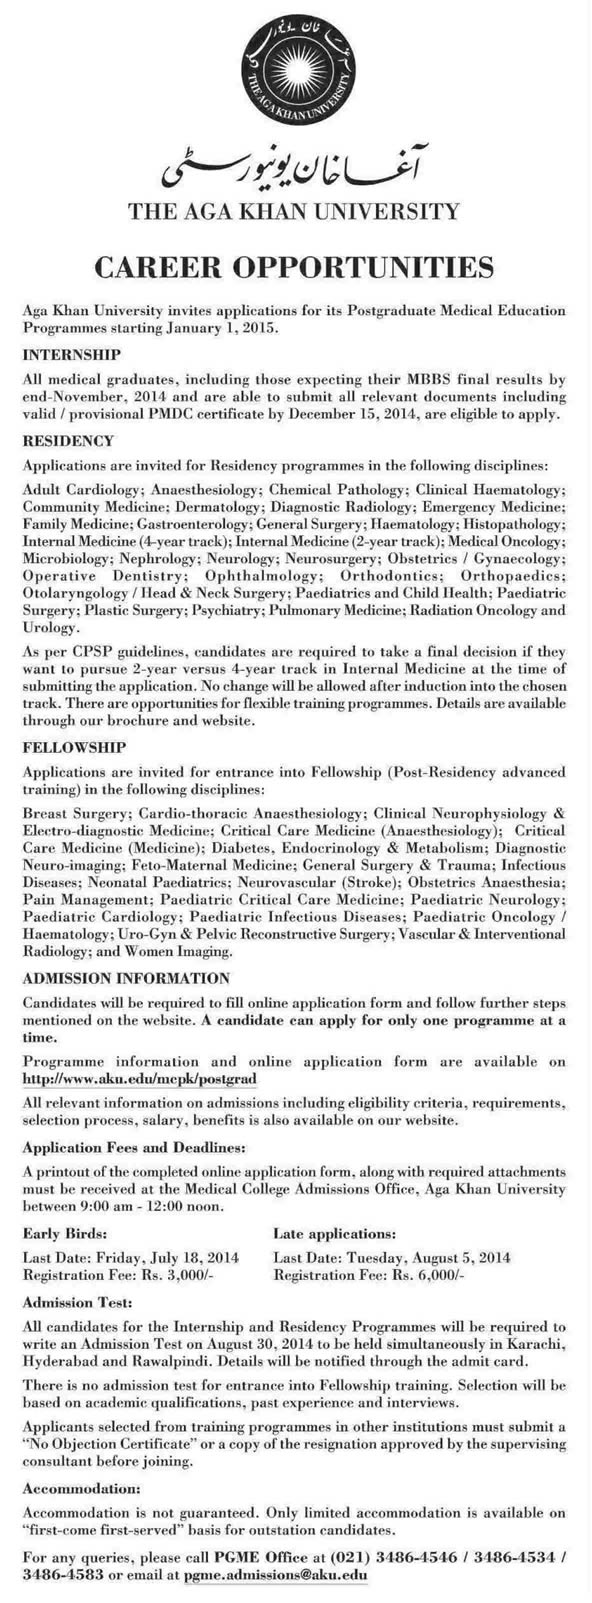 Aga Khan University Internships / Fellowships 2014 June Latest Advertisement